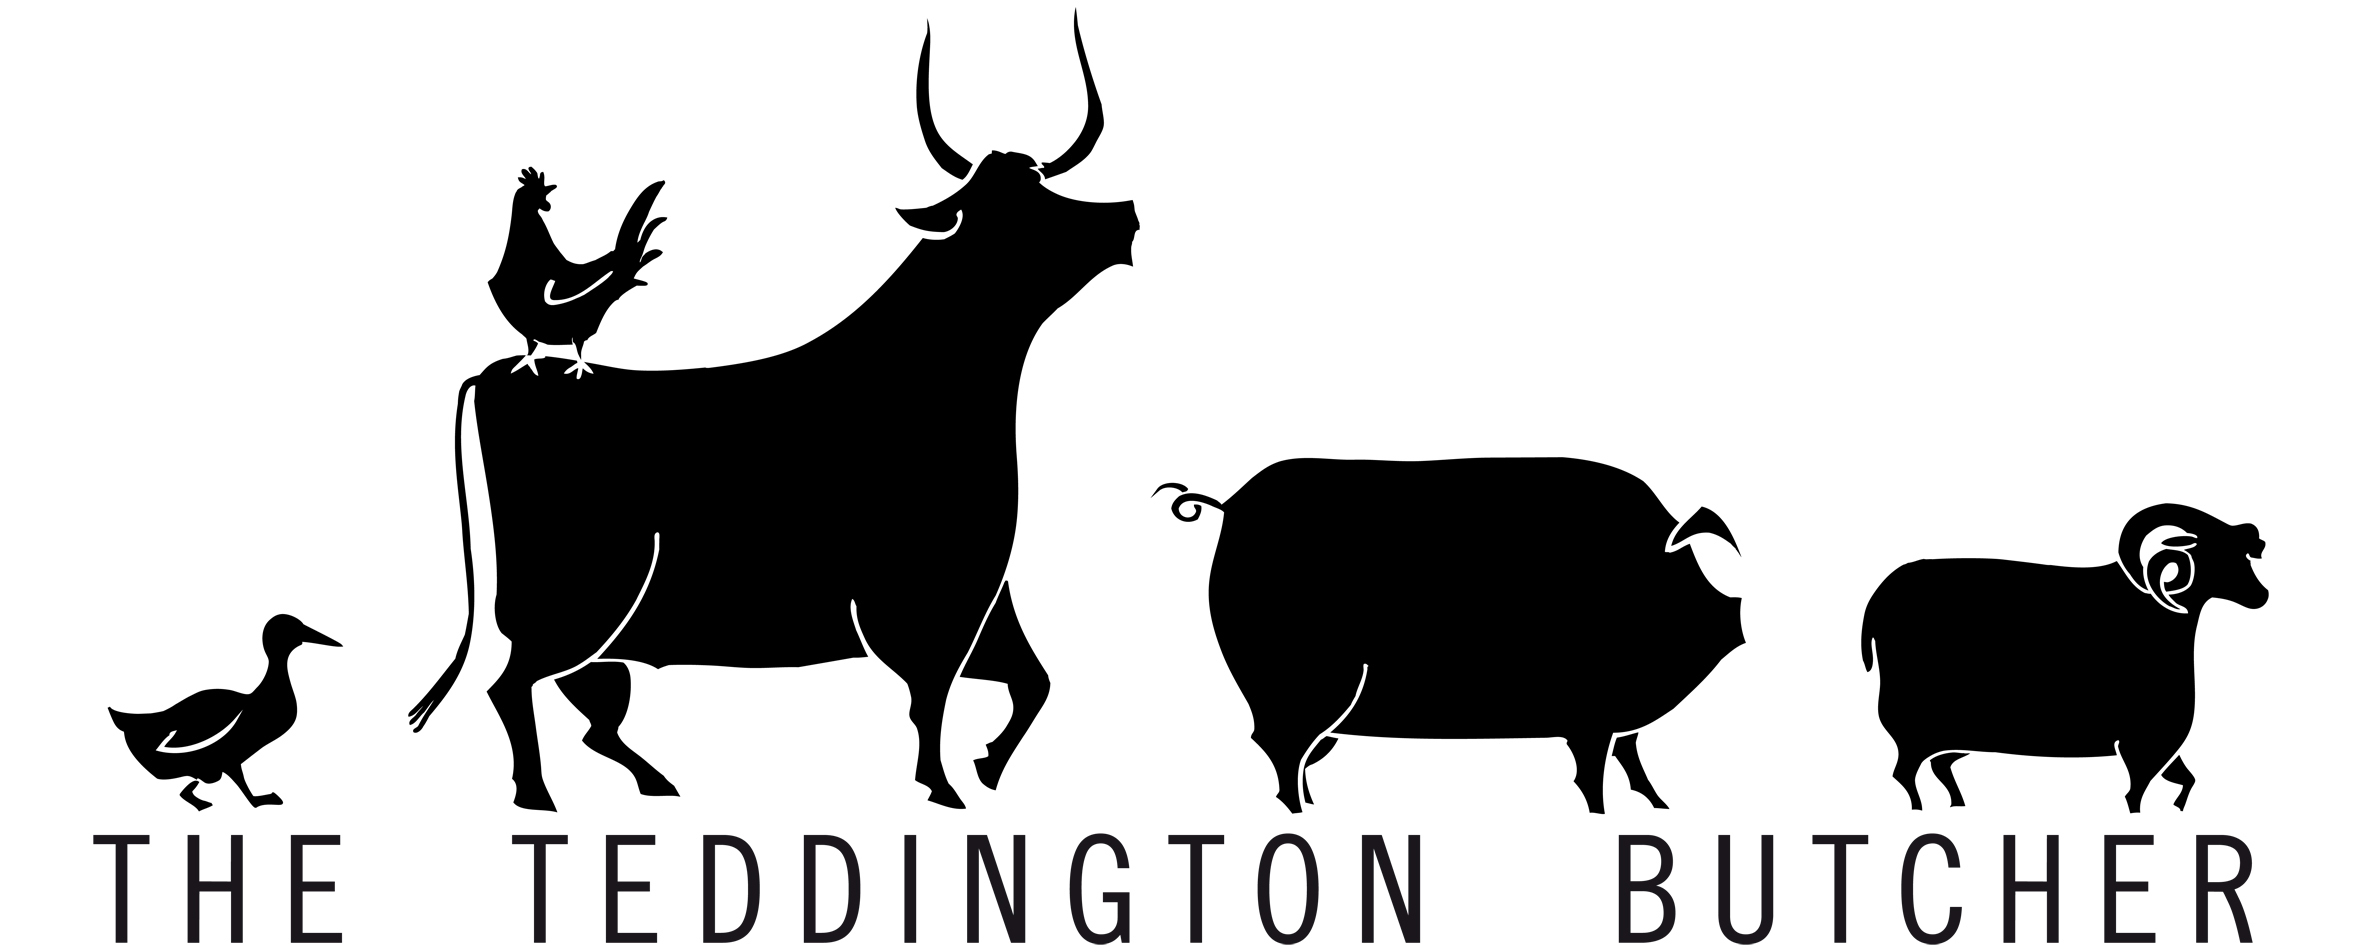 The Teddington Butcher Logo and re-branding project